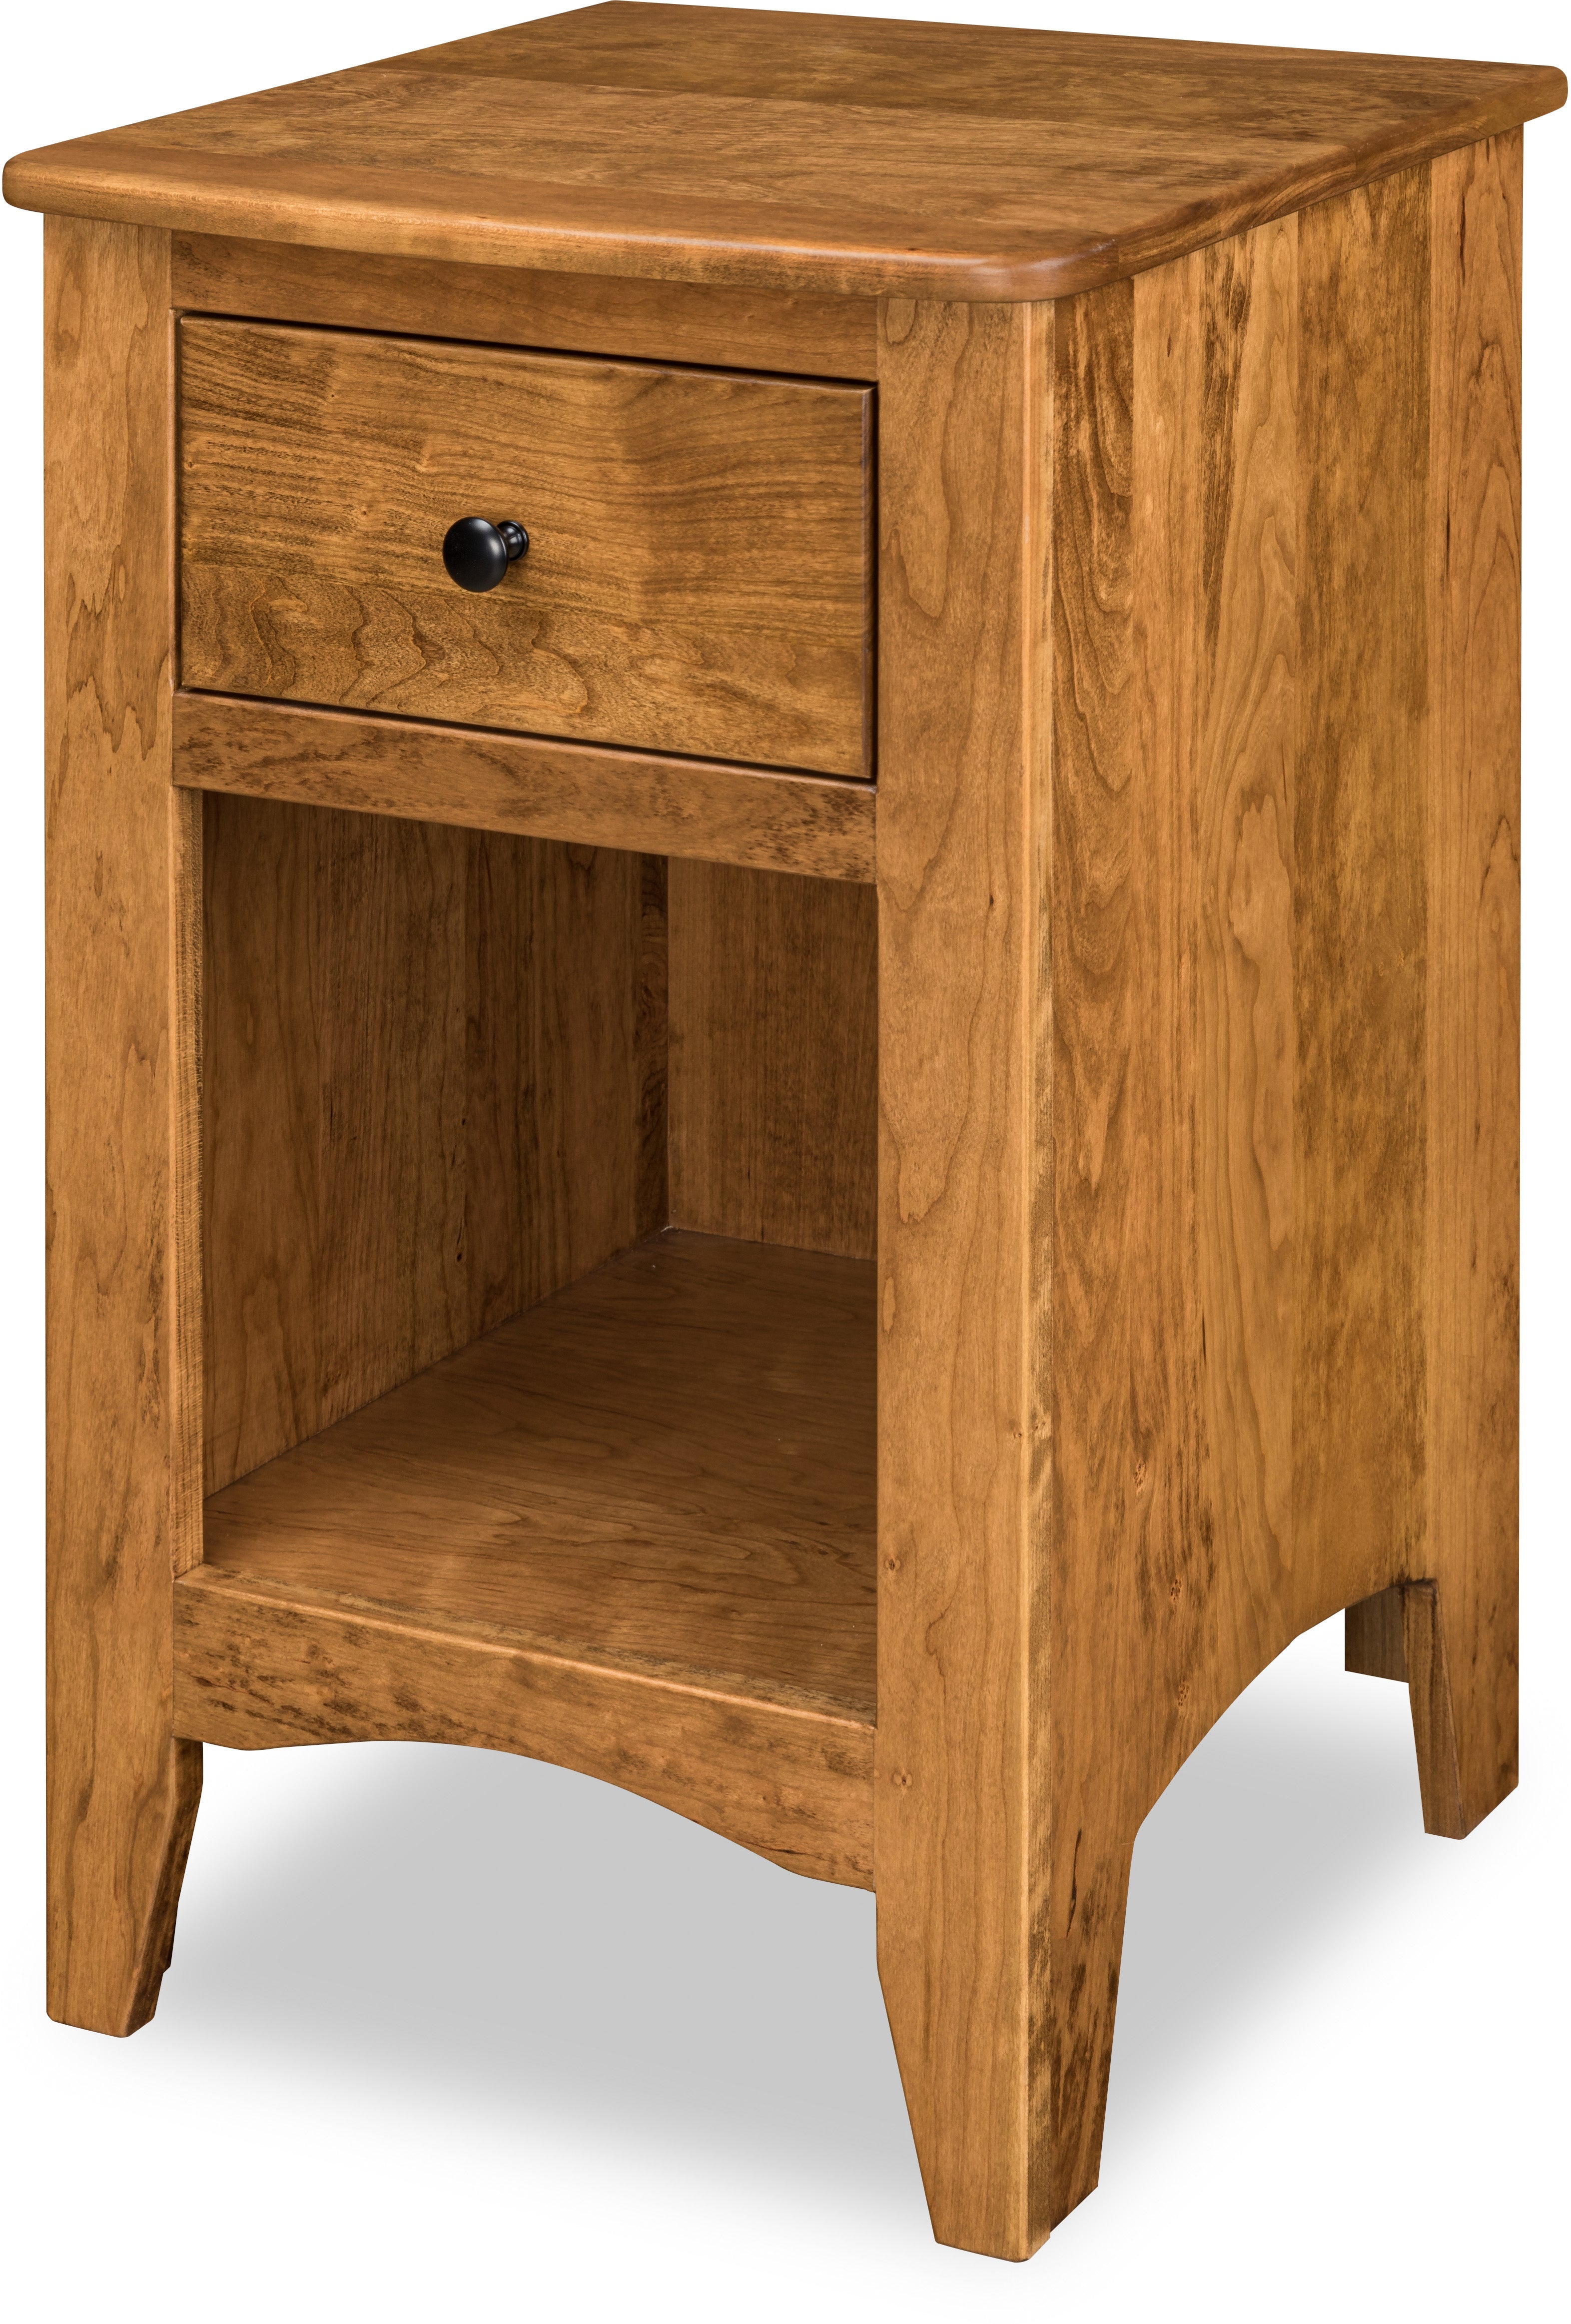 celina one drawer nightstand in sap cherry wood with medium walnut stain